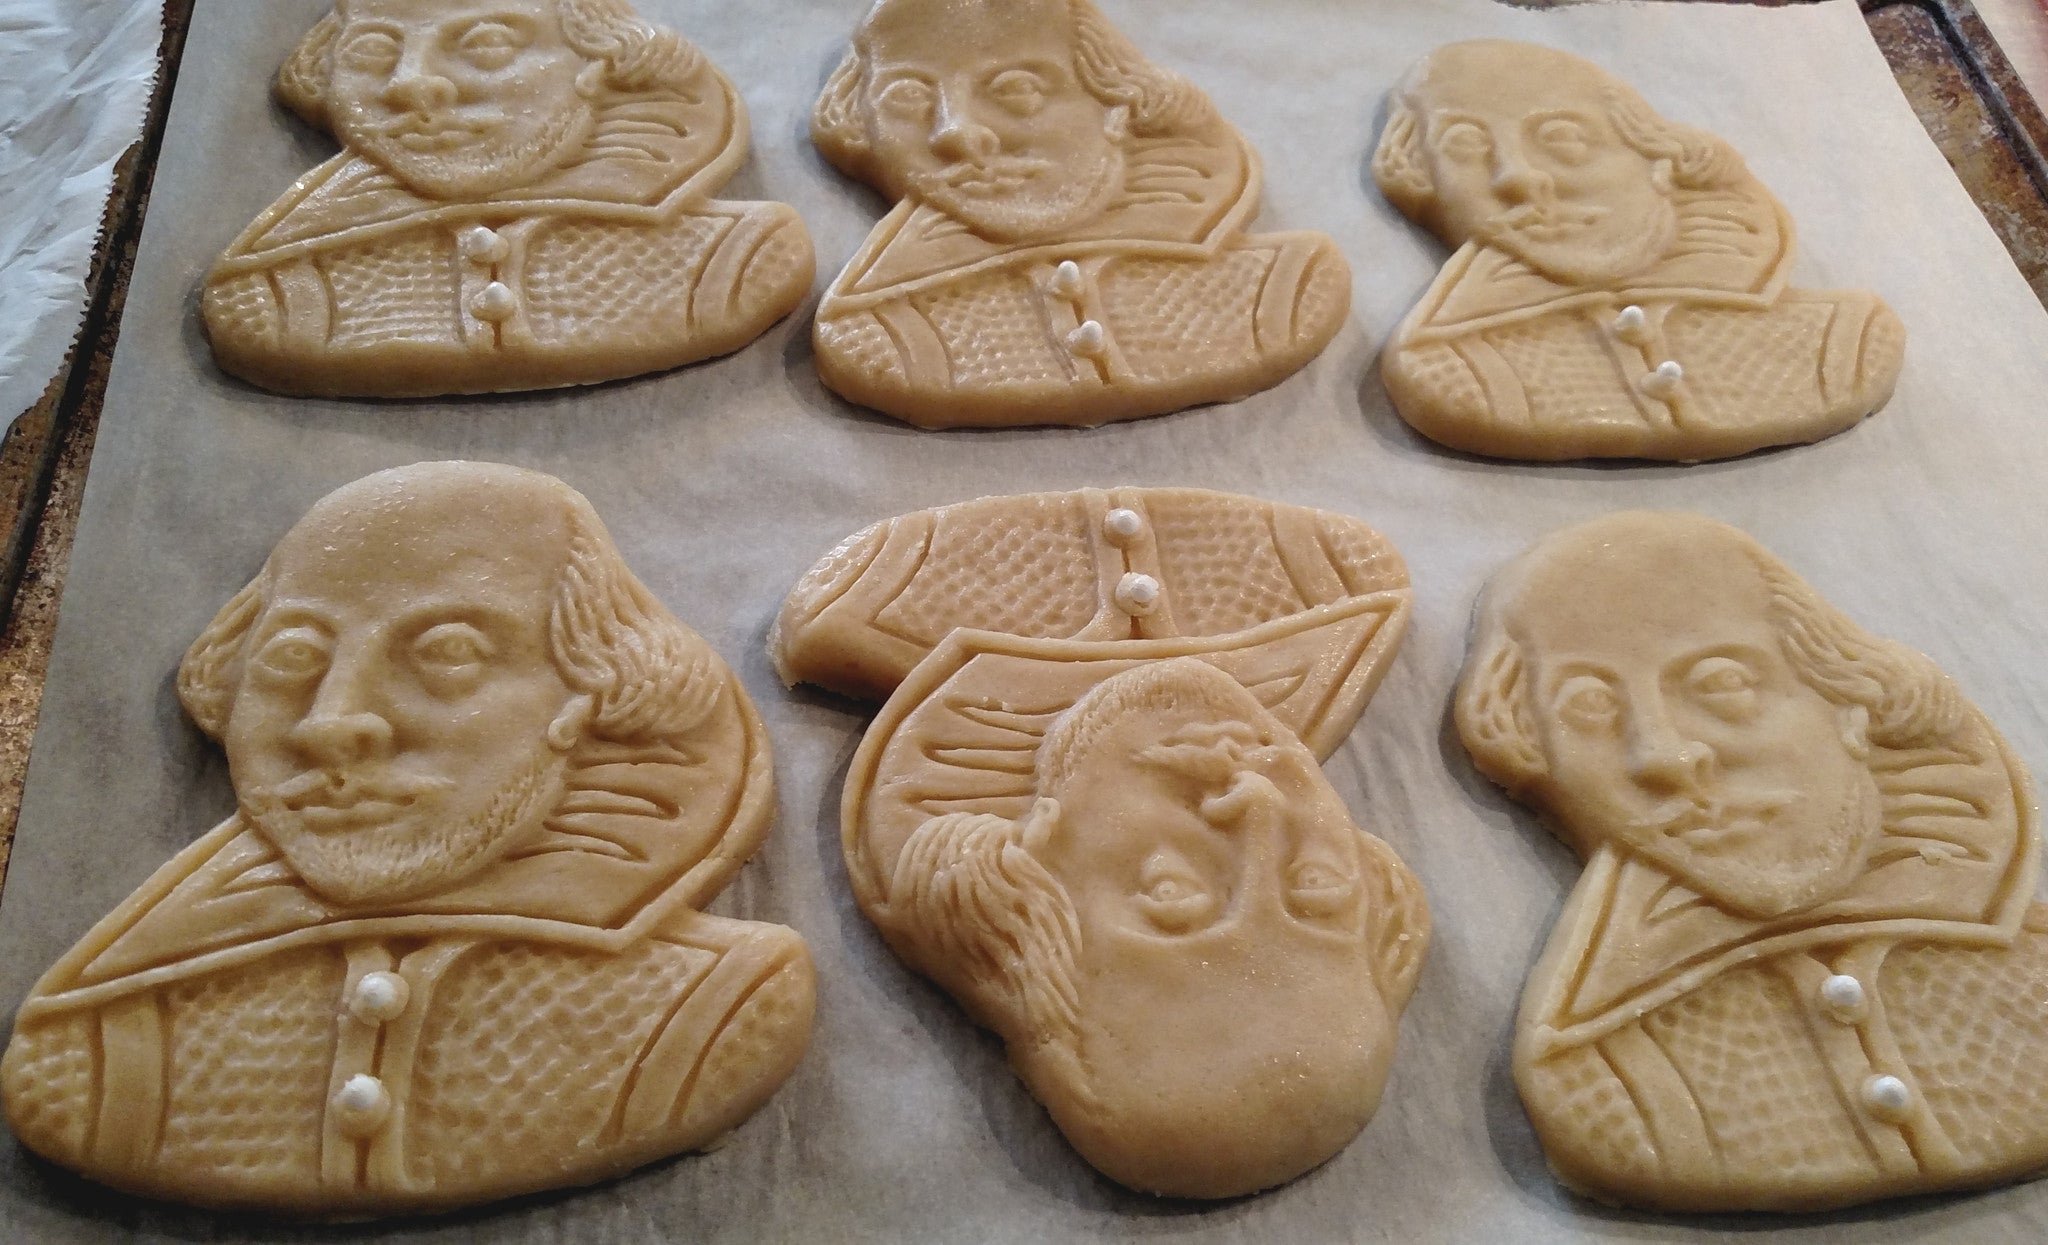 Shakespeare Cookie Mold - Artesão Unique & Custom Cookie Molds